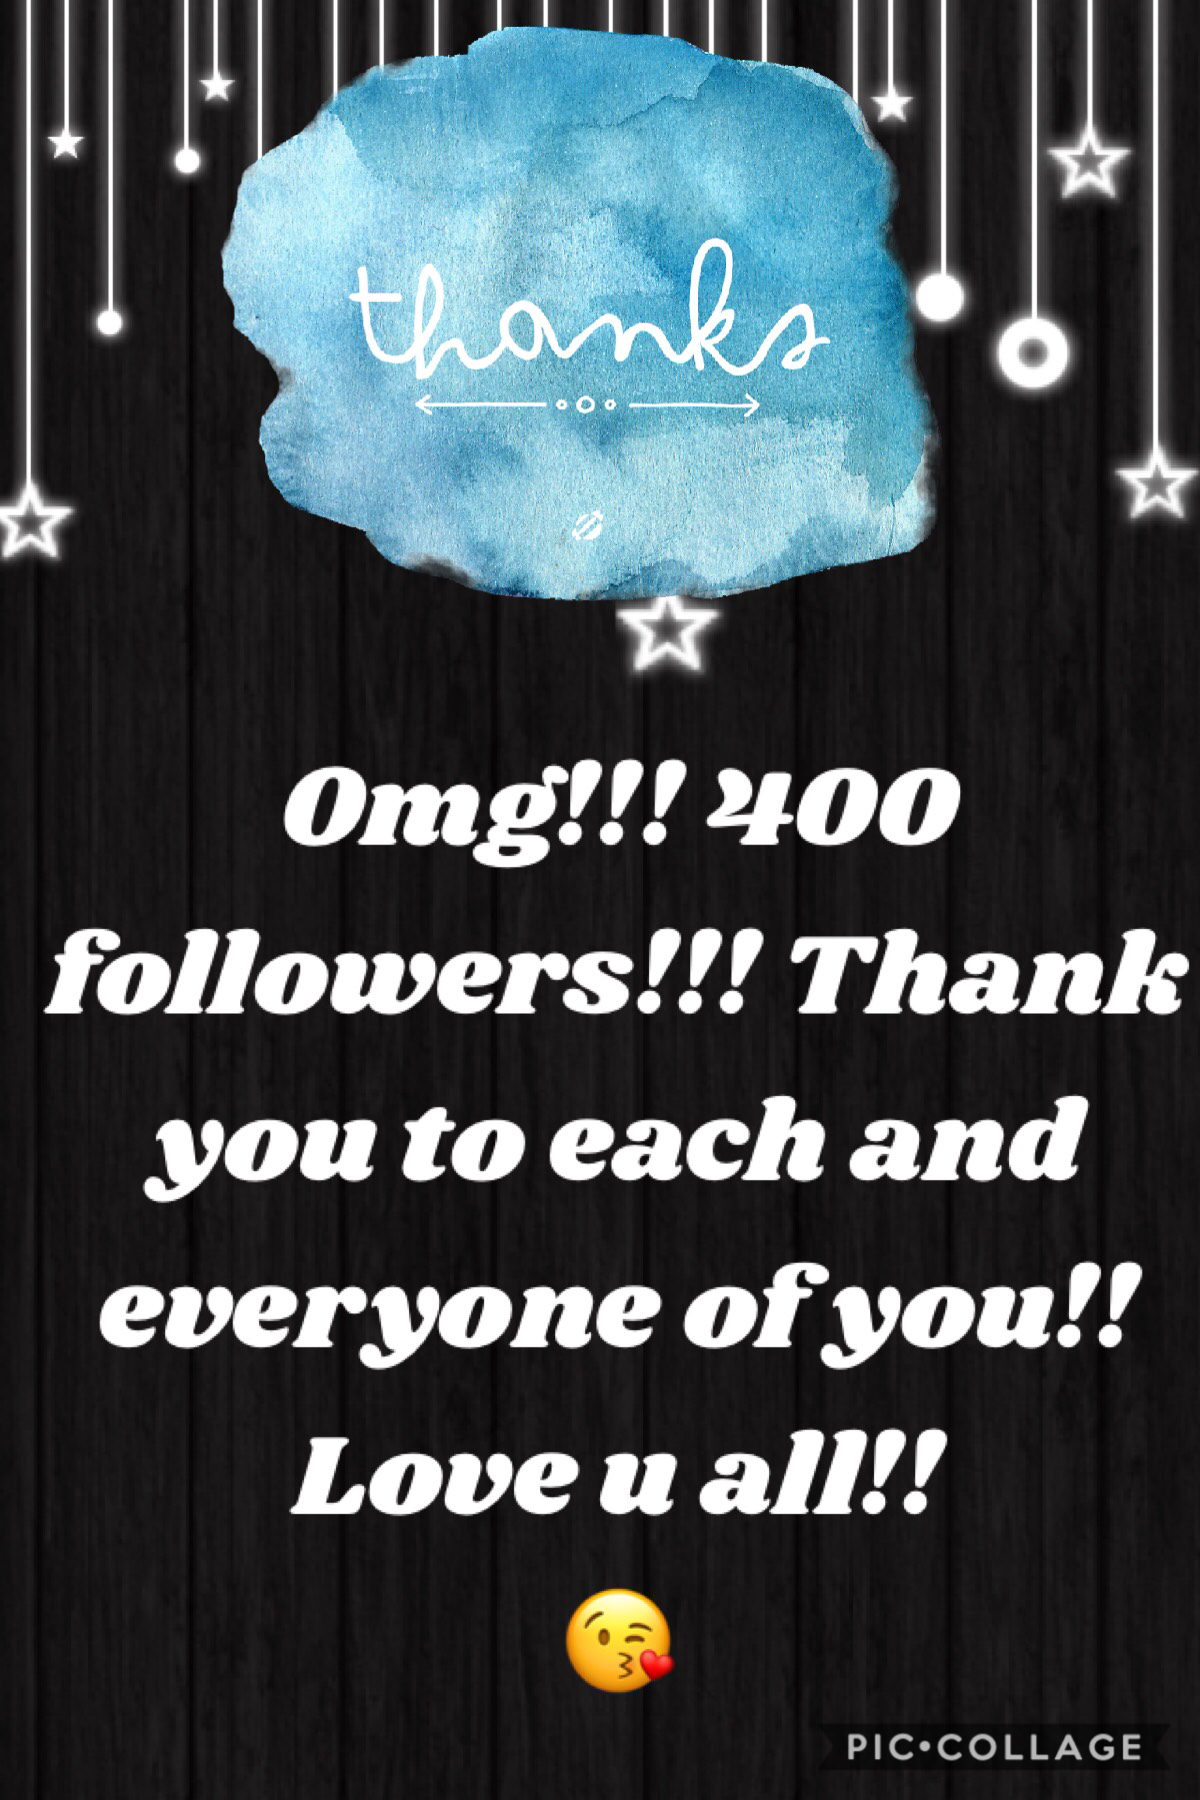 Thank you everyone!!!